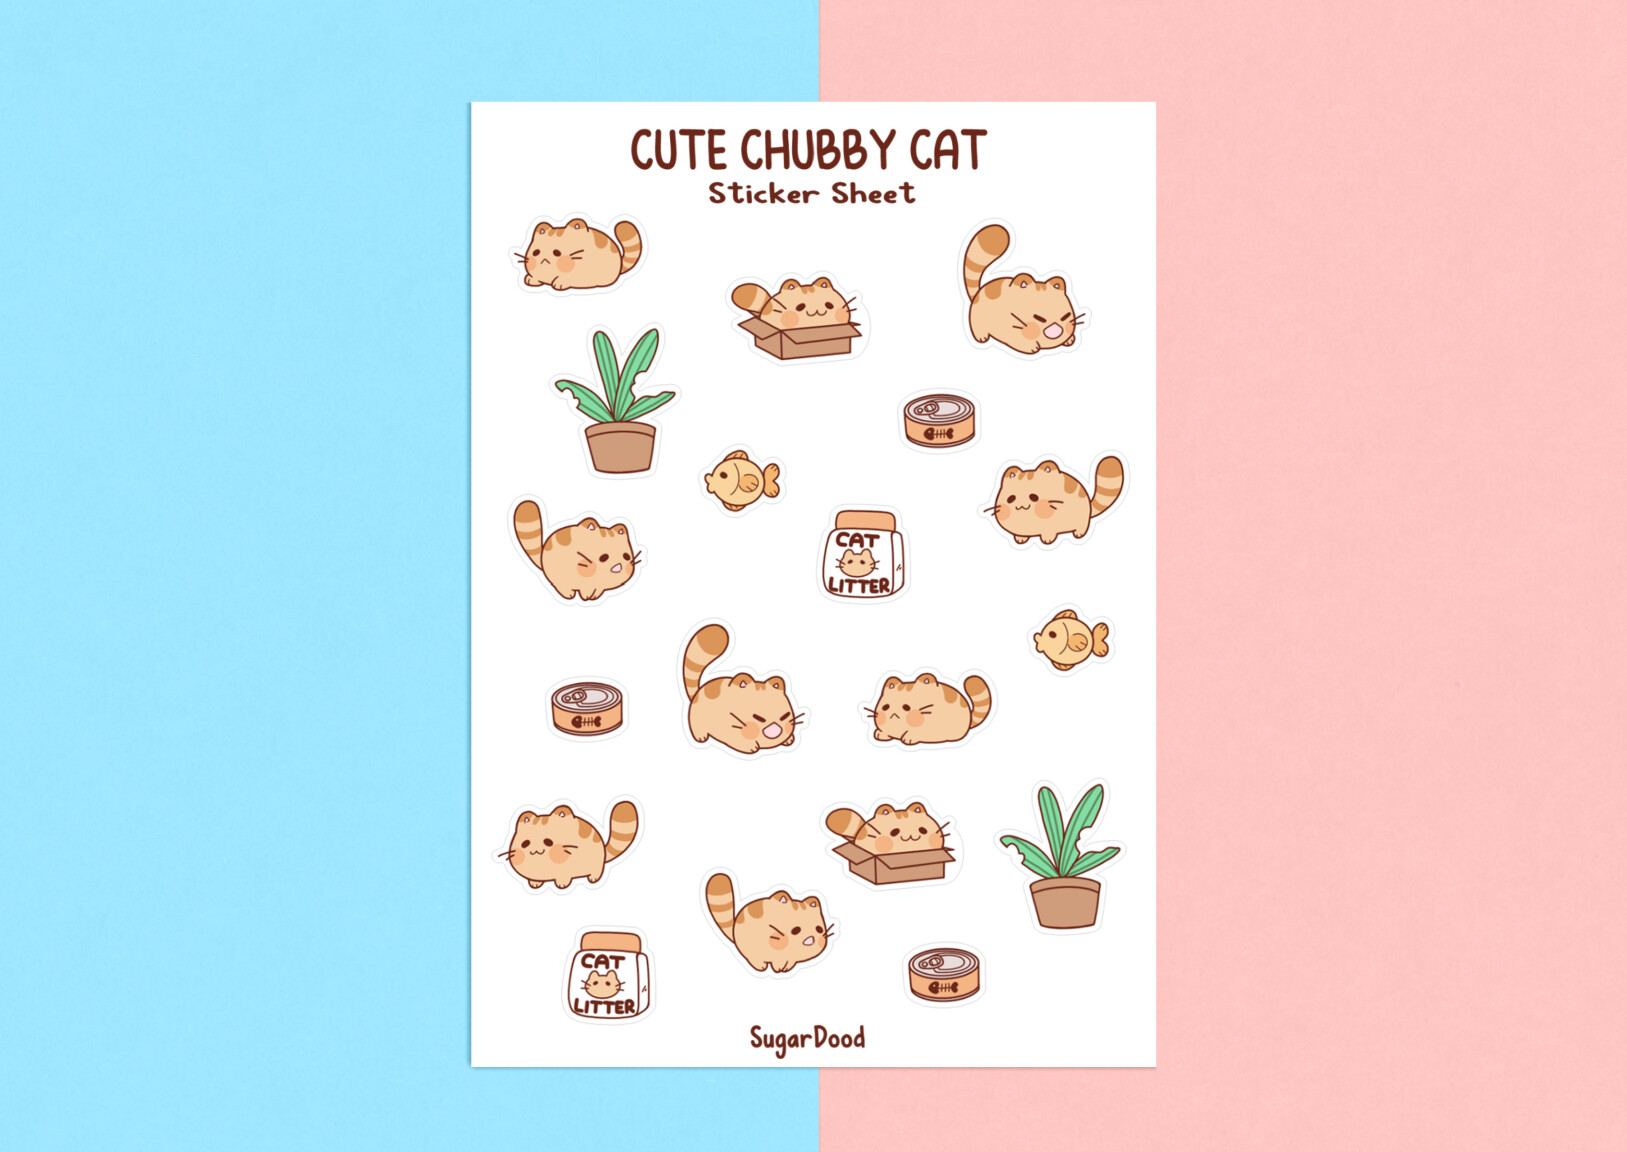 ArtStation - Chubby Cats Stickers